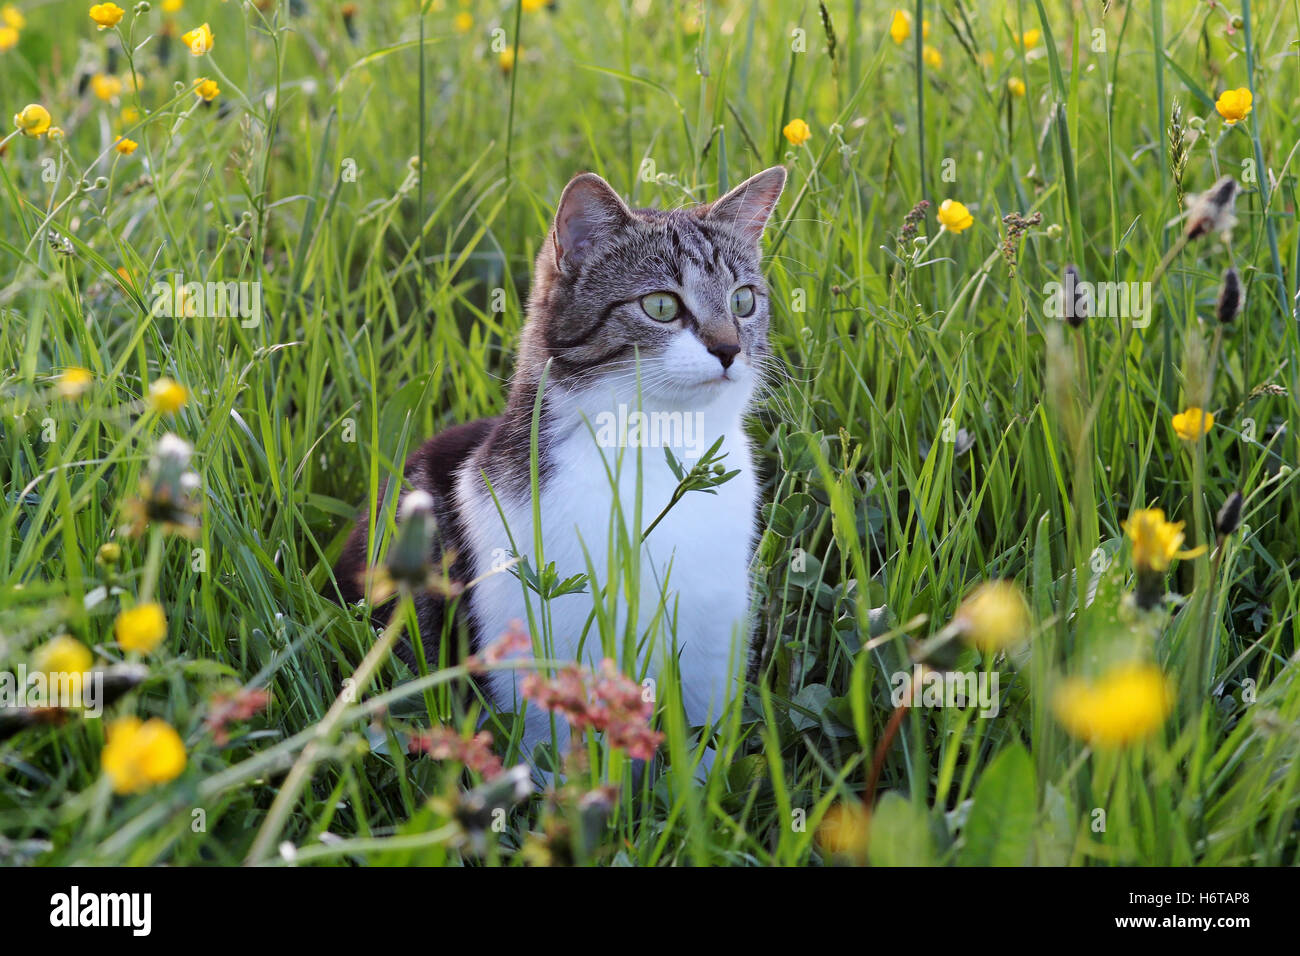 field, spring, hunt, meadow, pussycat, cat, domestic cat, grass, lawn, green, Stock Photo